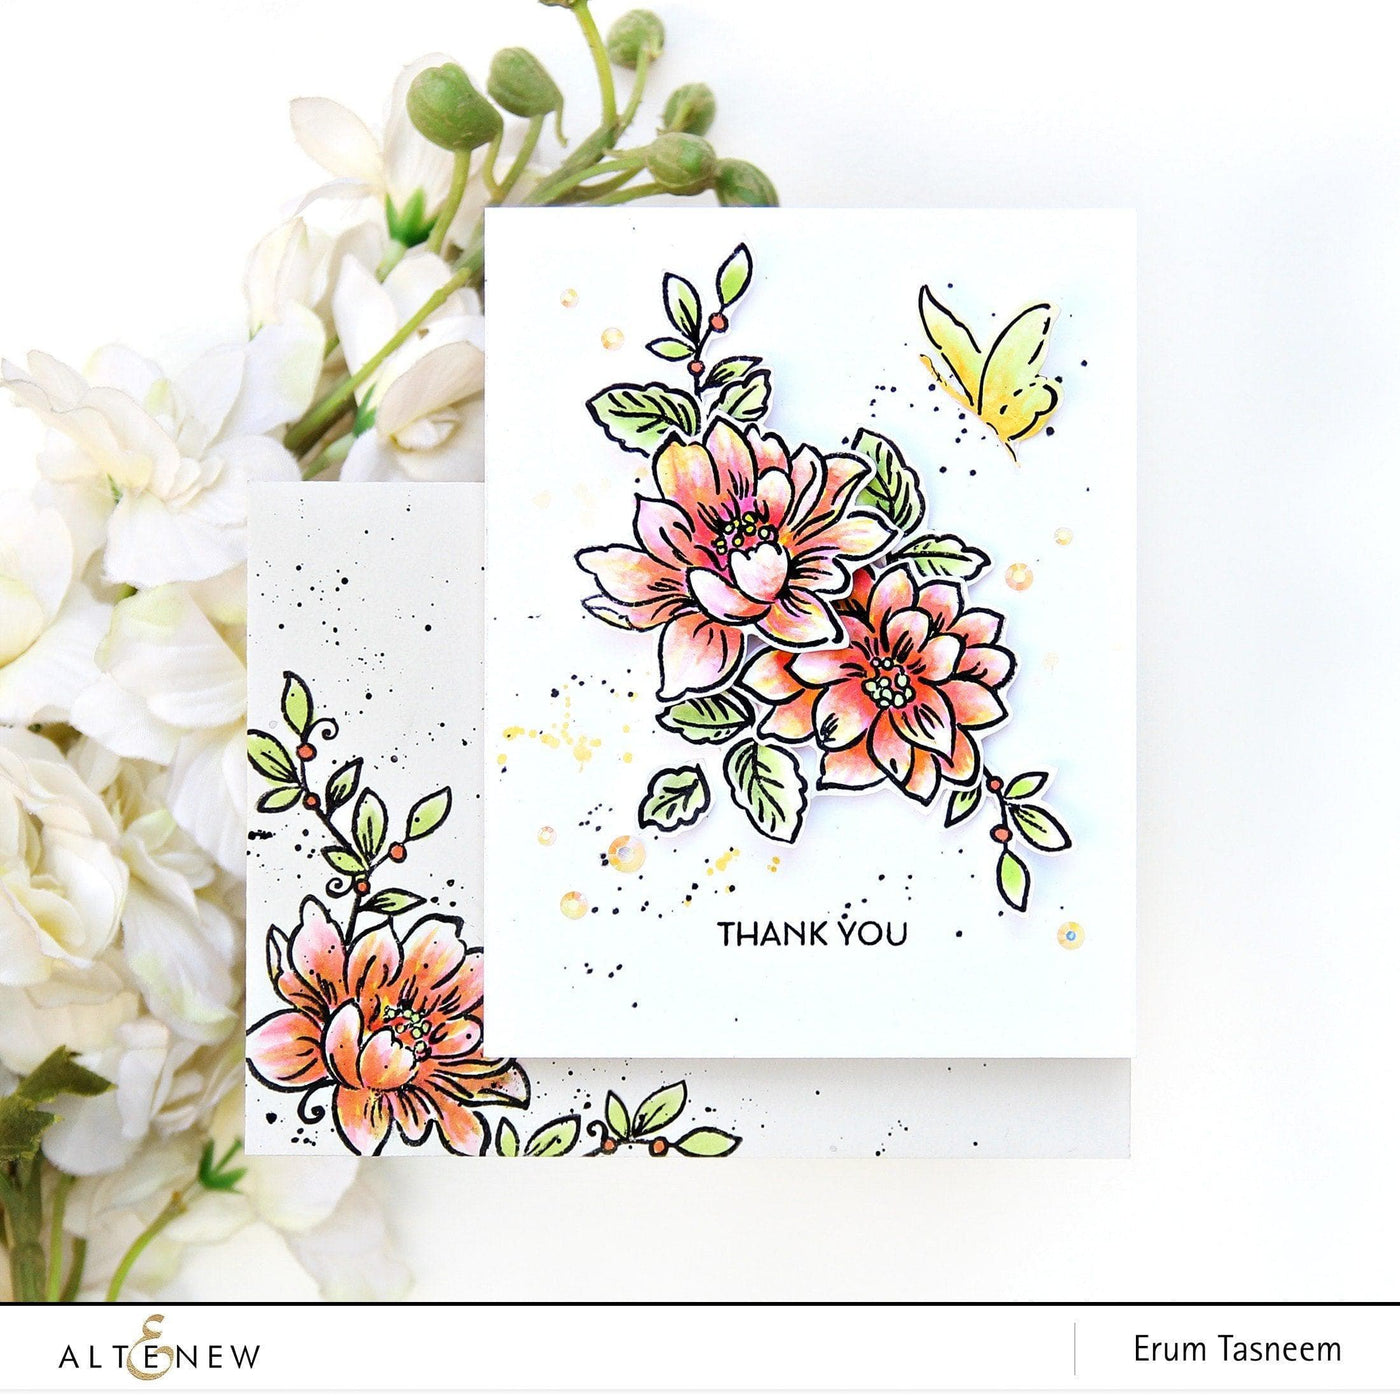 Altenew Stamp & Die Bundle Sunlit Flowers Bundle